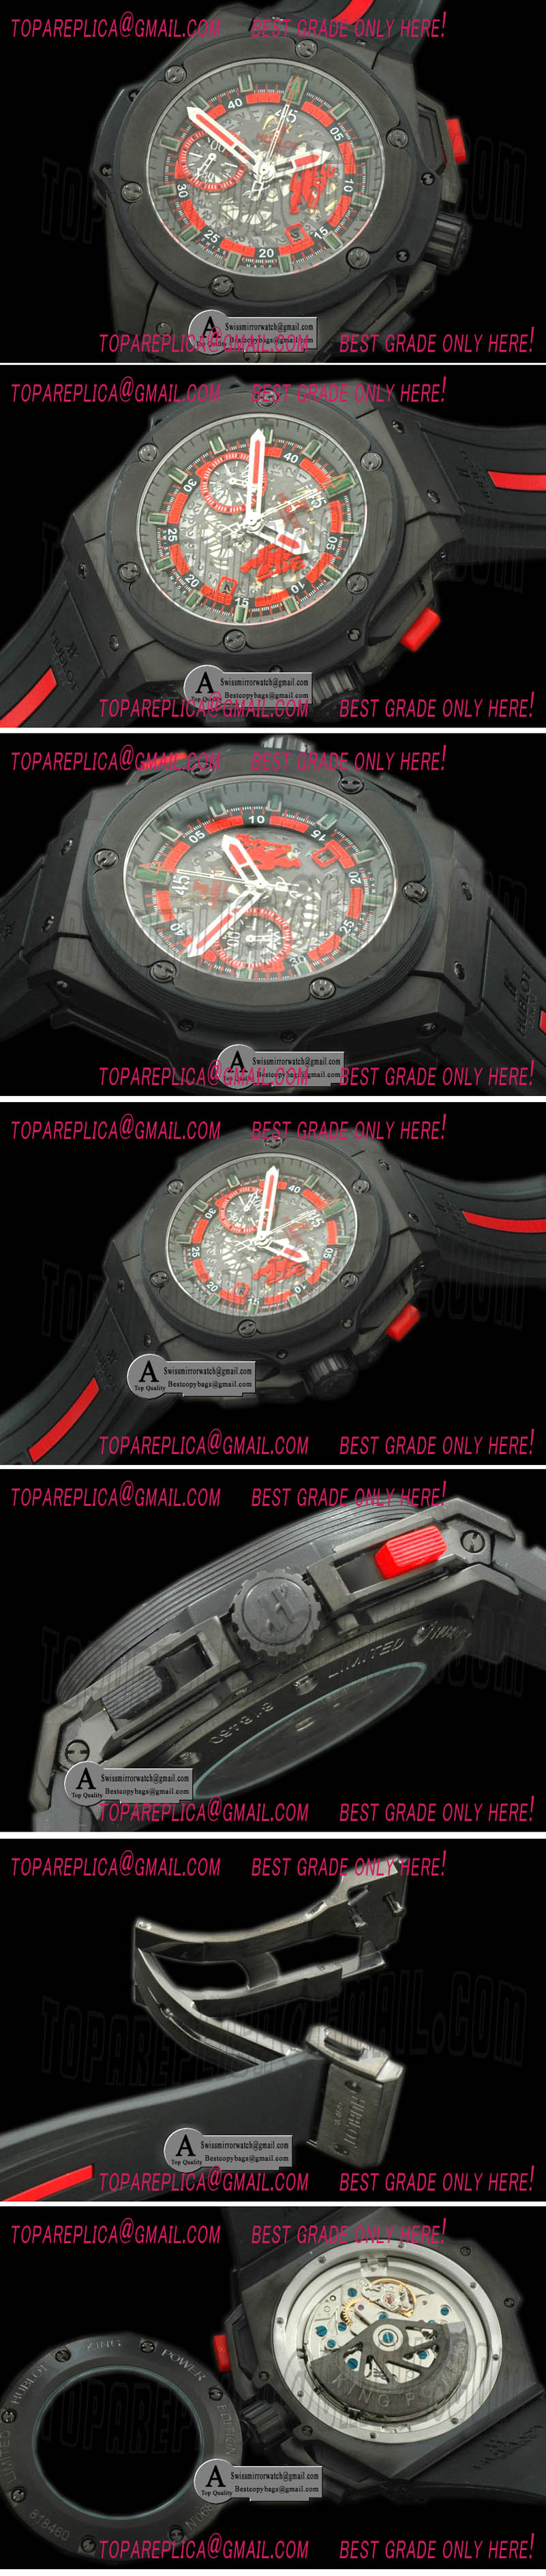 Hublot 716.CI.1129.RX.MAN11 King Power Red Devil PVD/Rubber Skeleton Asian 7750 Replica Watches